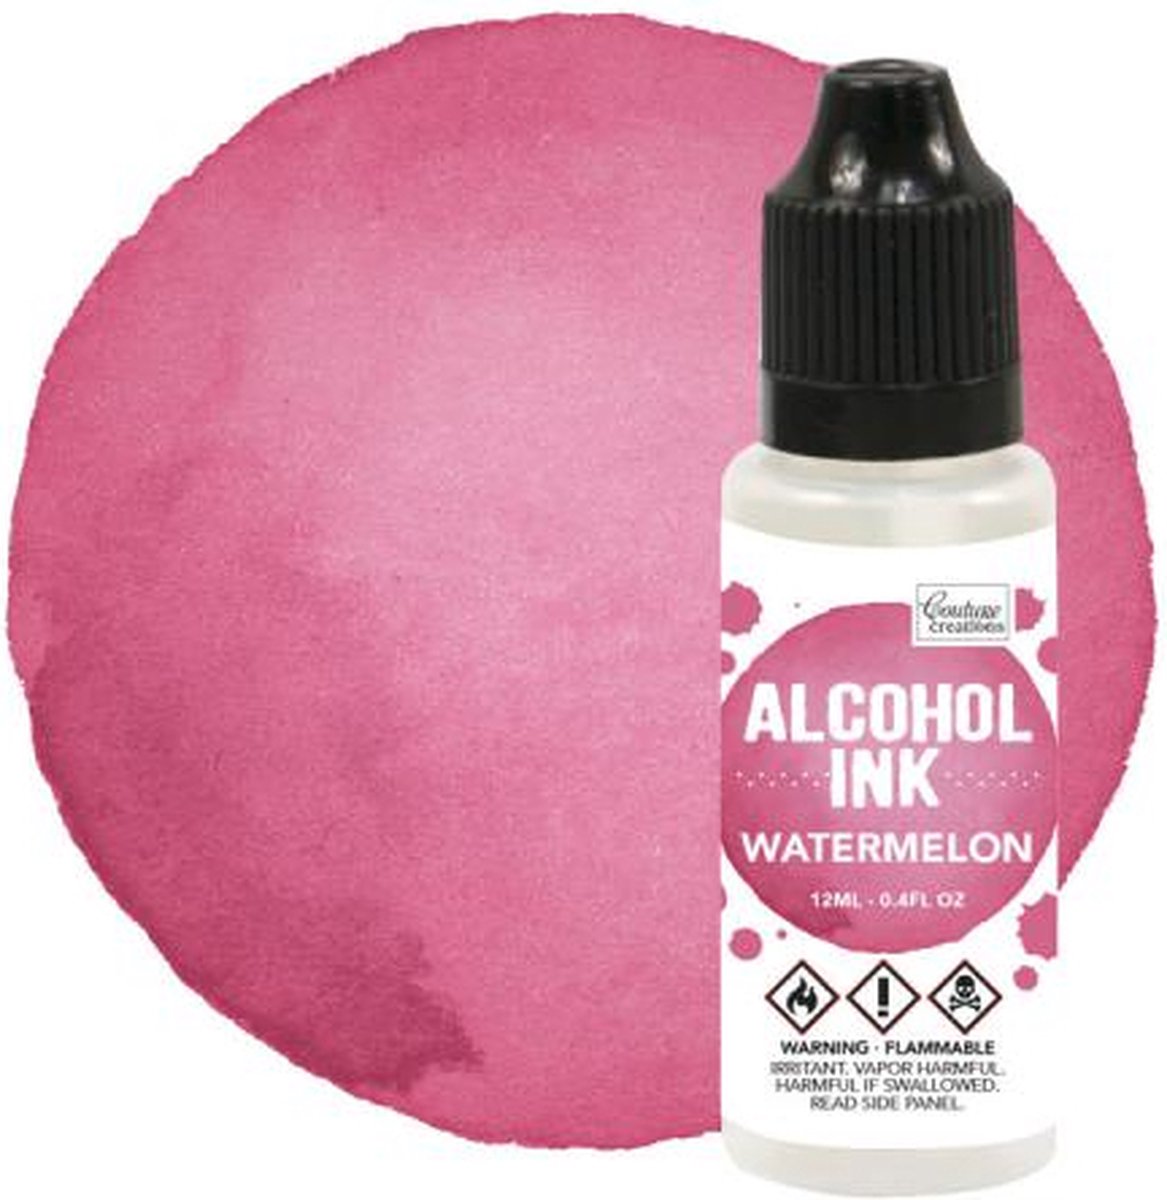 Alcohol Ink Coral / Watermelon (12mL | 0.4fl oz)